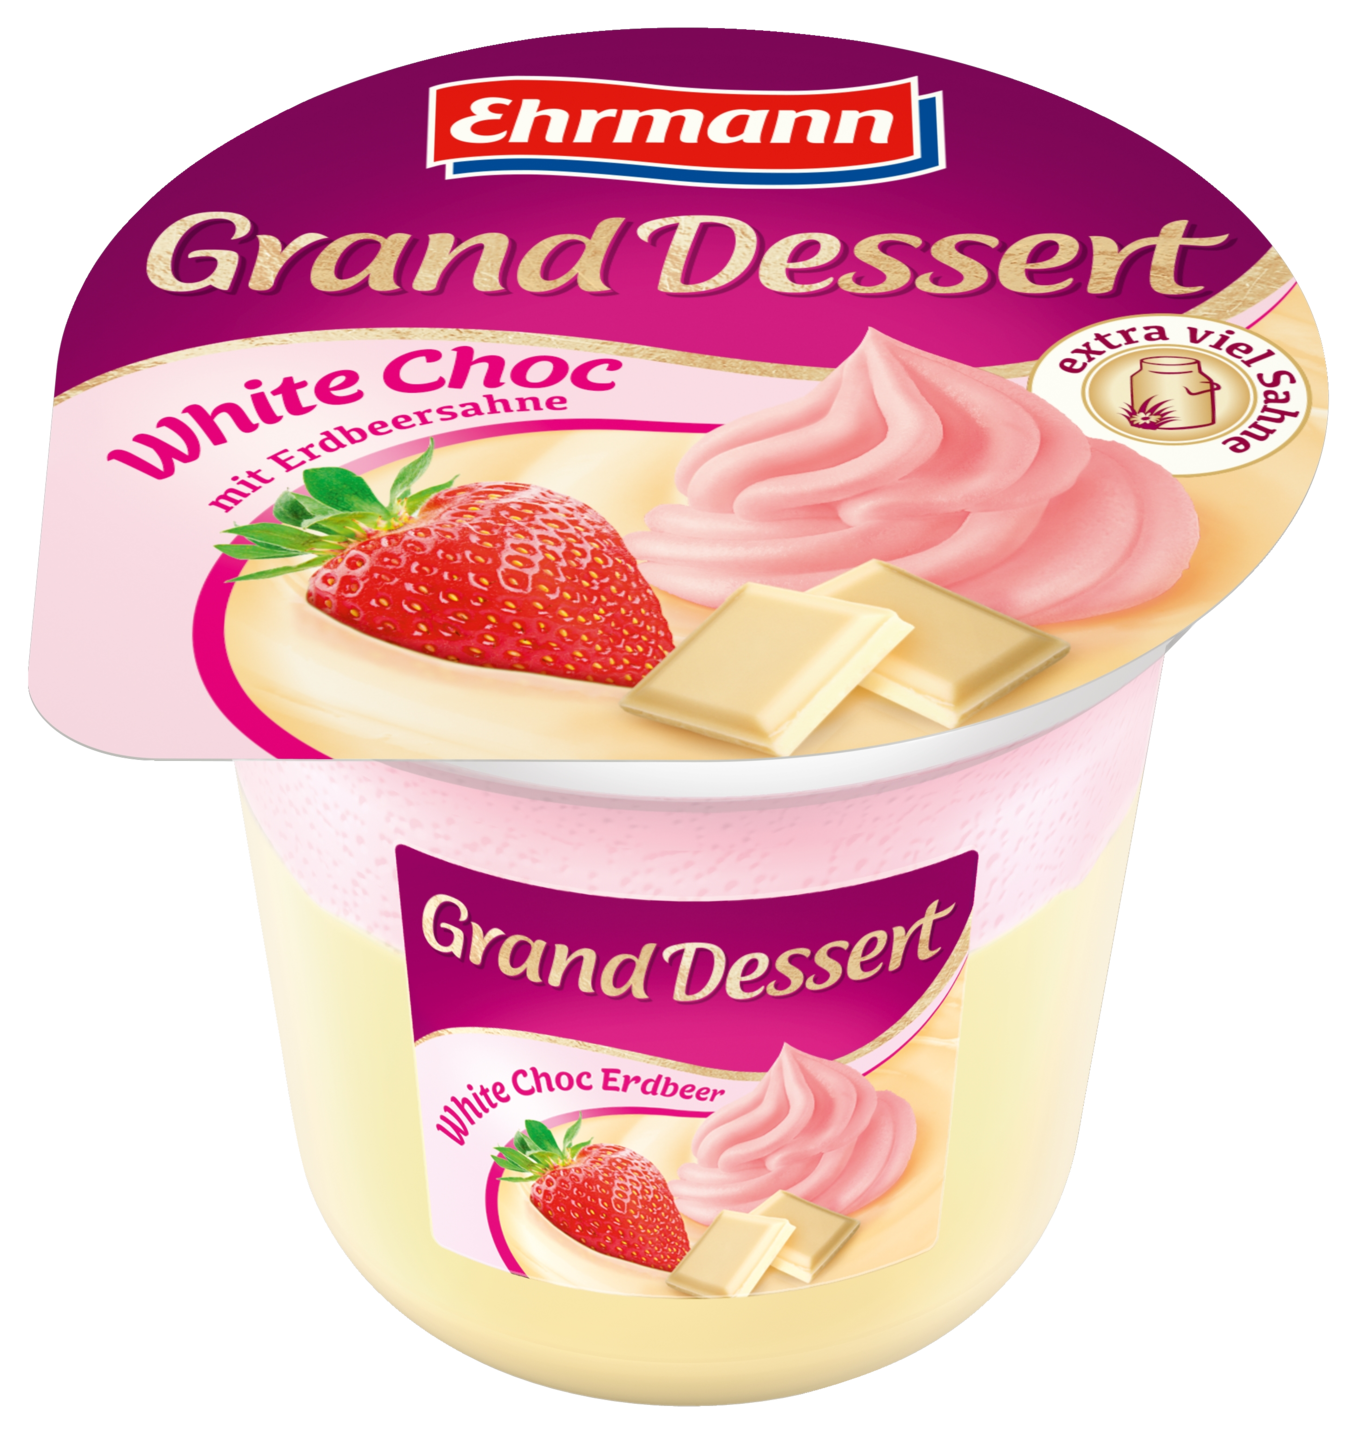 Эрманн Гранд десерт. Пудинг Ehrmann Grand. Йогурт Эрманн Гранд. Йогурт Гранд десерт. Ehrmann grand dessert шоколад